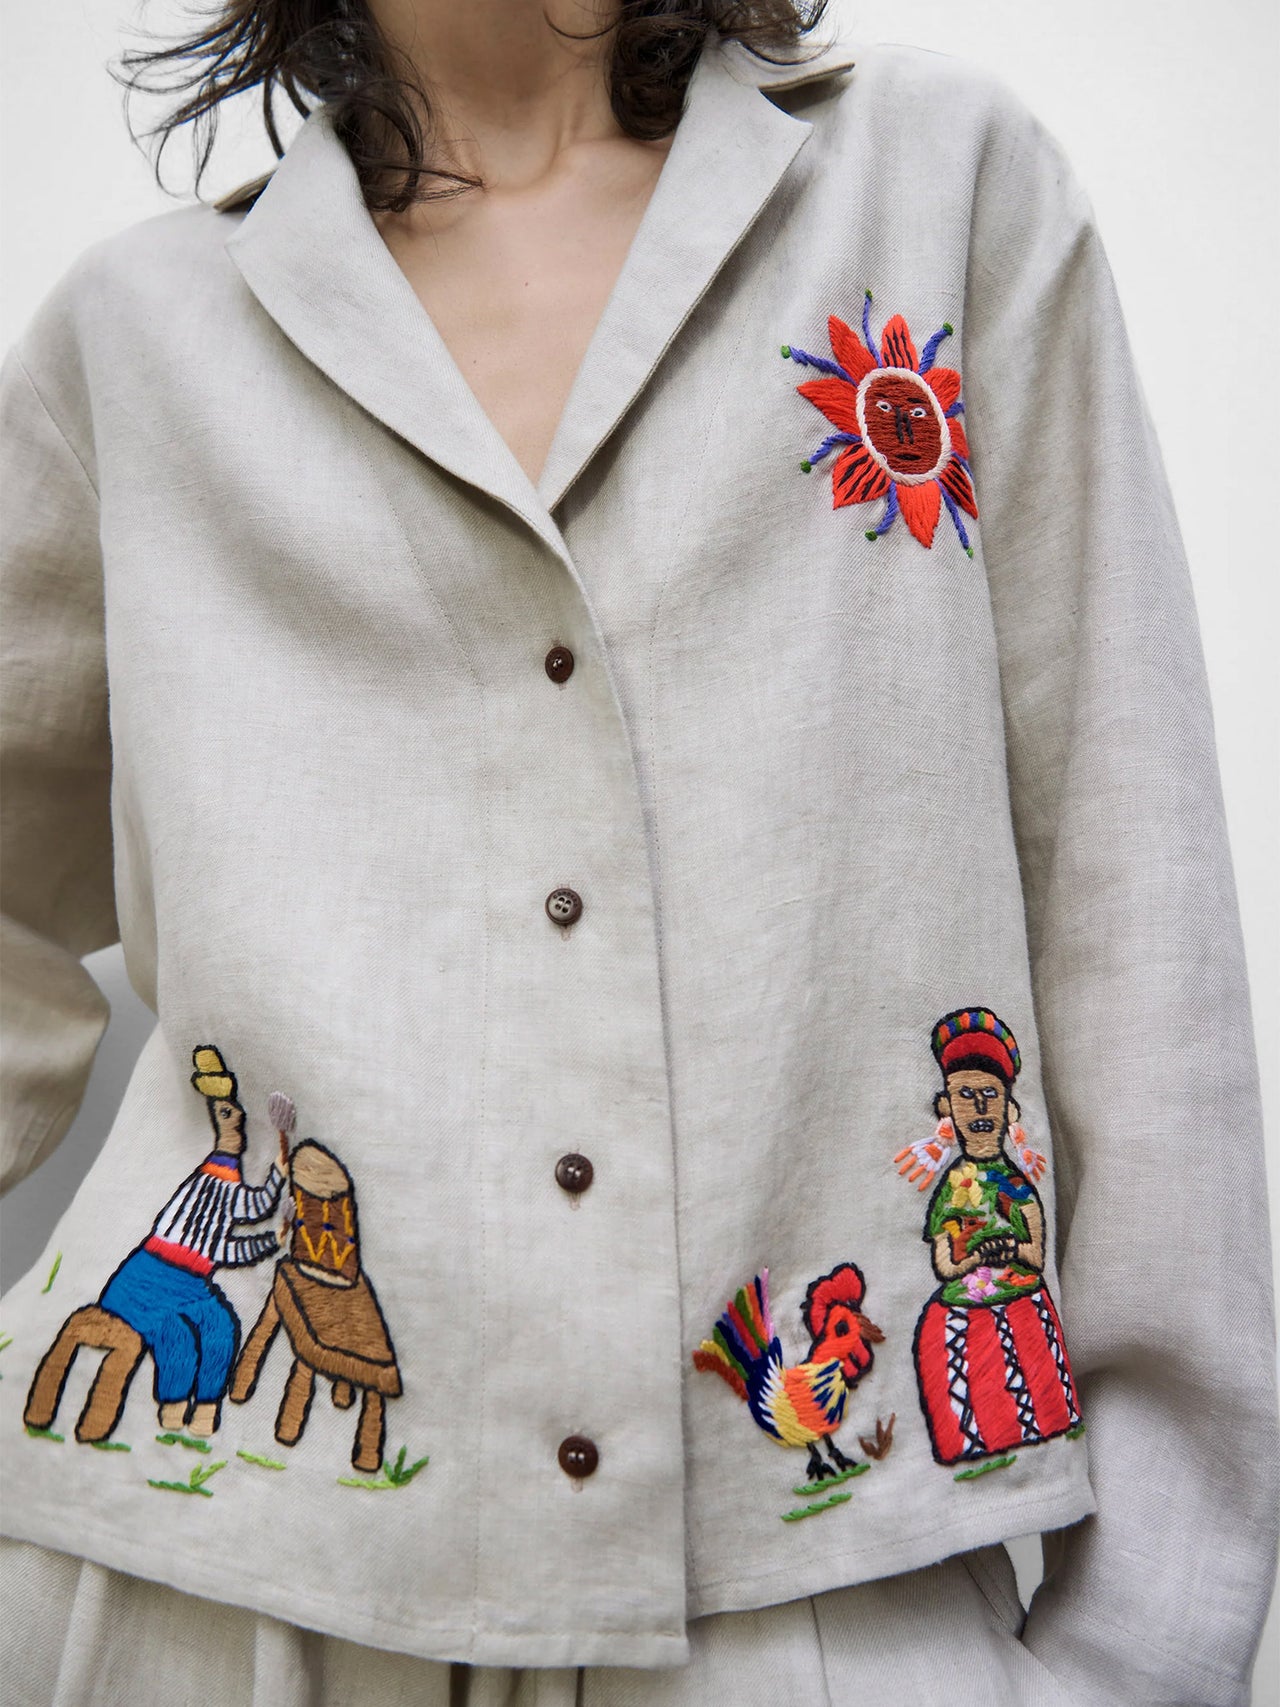 CORDERA Raices Hand-Embroidered Shirt